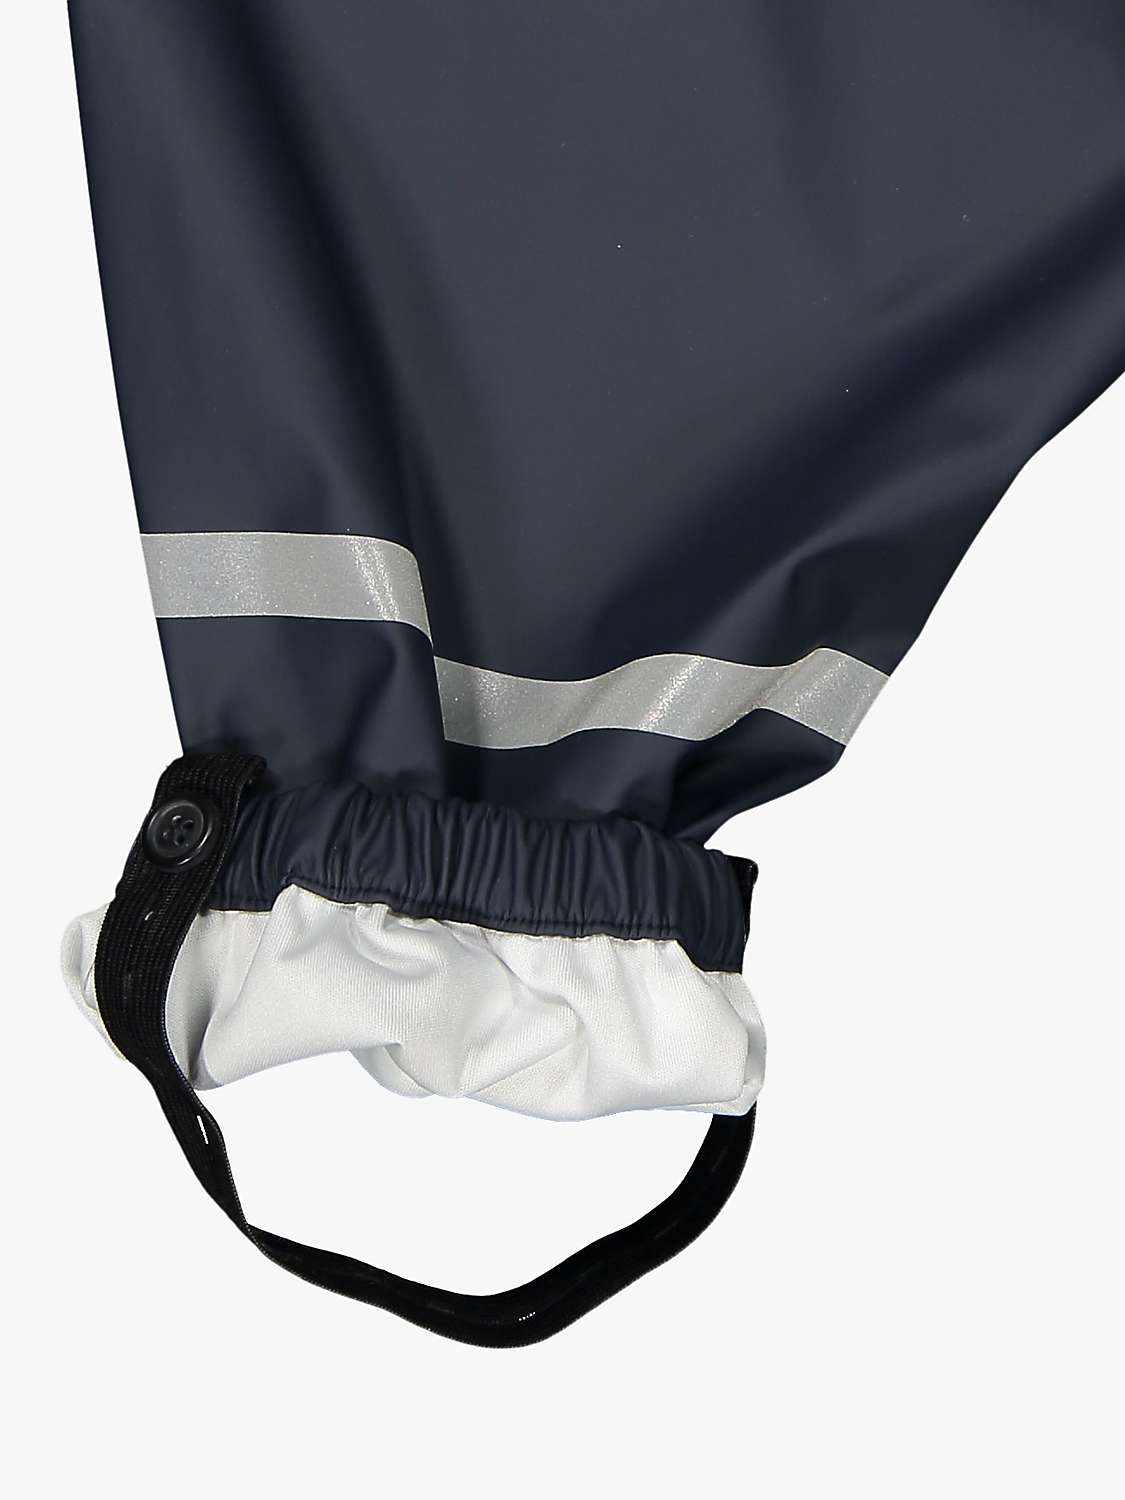 Buy Polarn O. Pyret Kids' Waterproof Rain Trousers Online at johnlewis.com